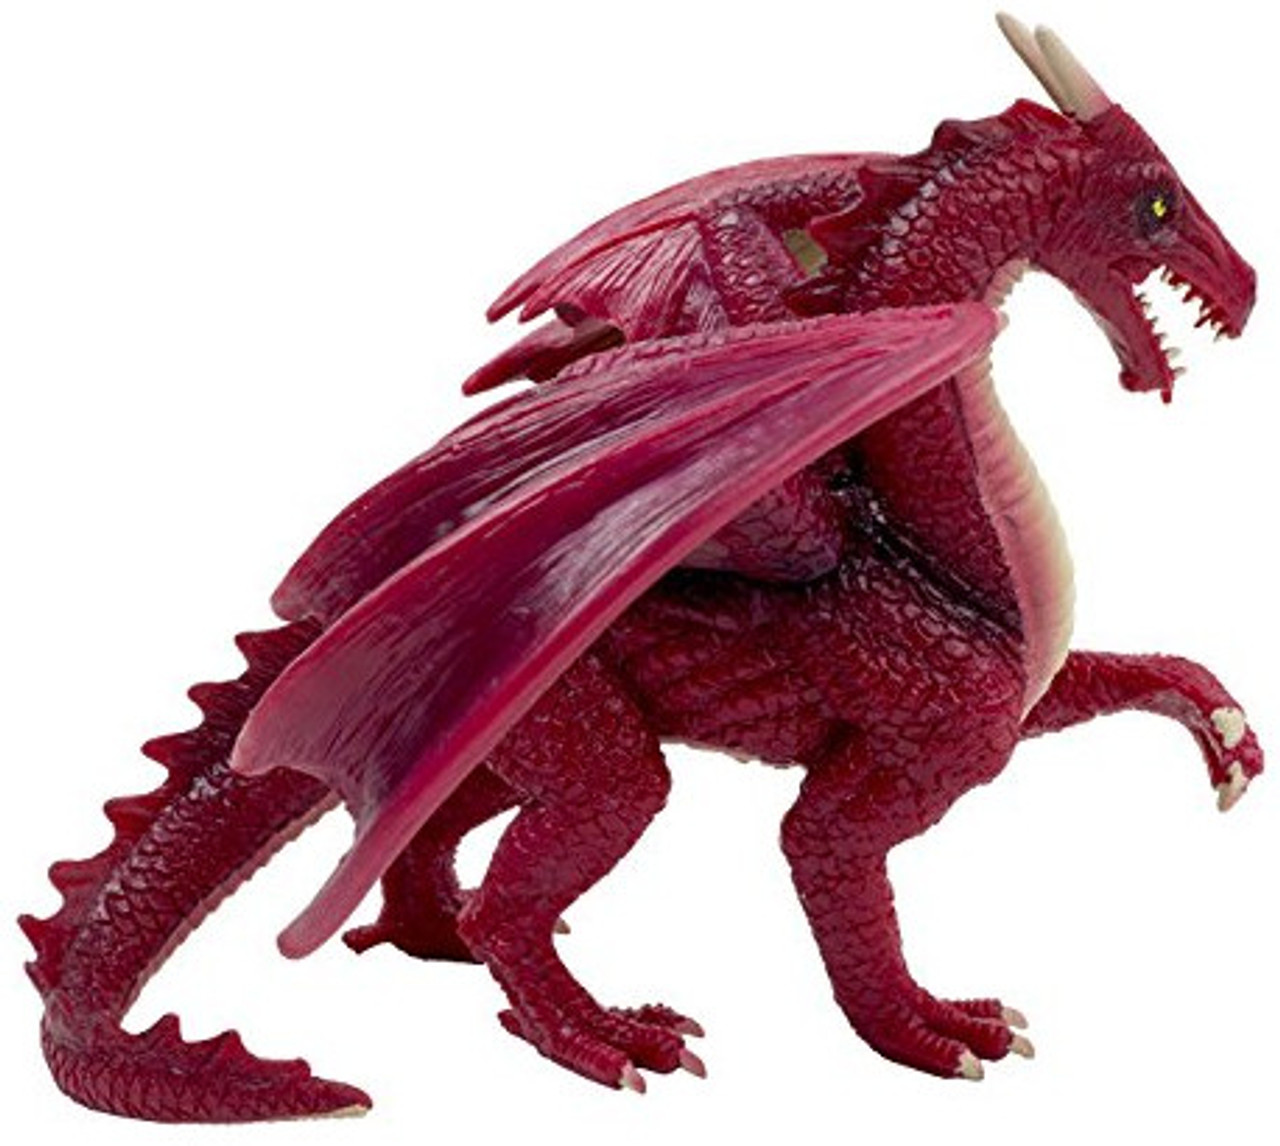 MOJO Steel Dragon Realistic Fantasy Toy Replica Hand Painted Figurine